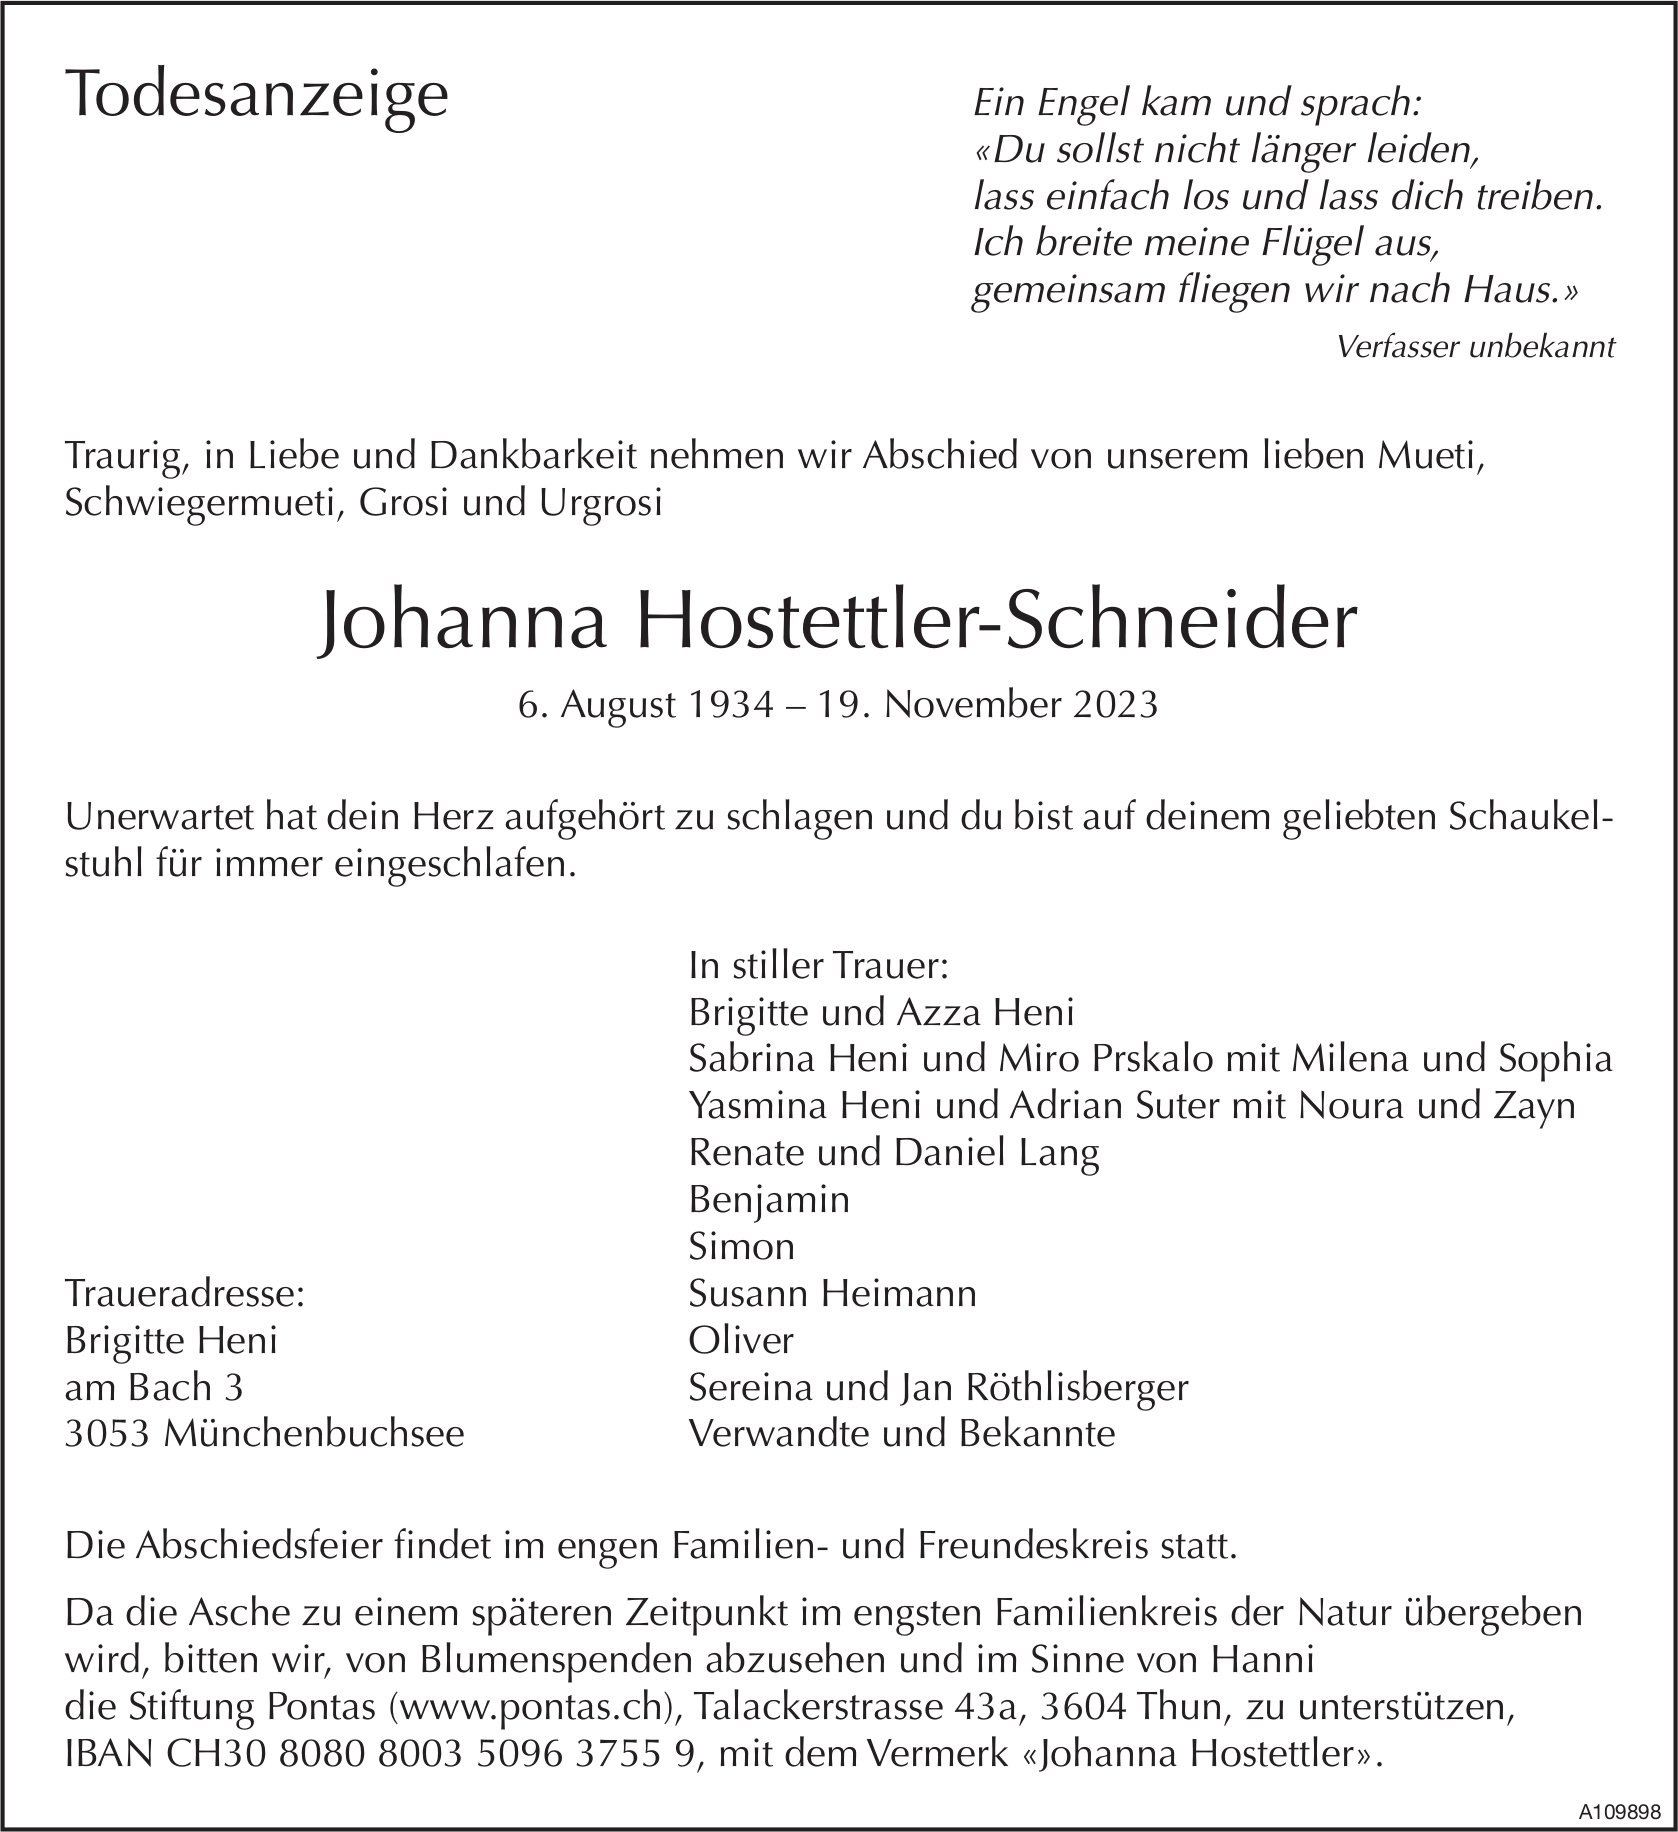 Johanna Hostettler-Schneider, November 2023 / TA